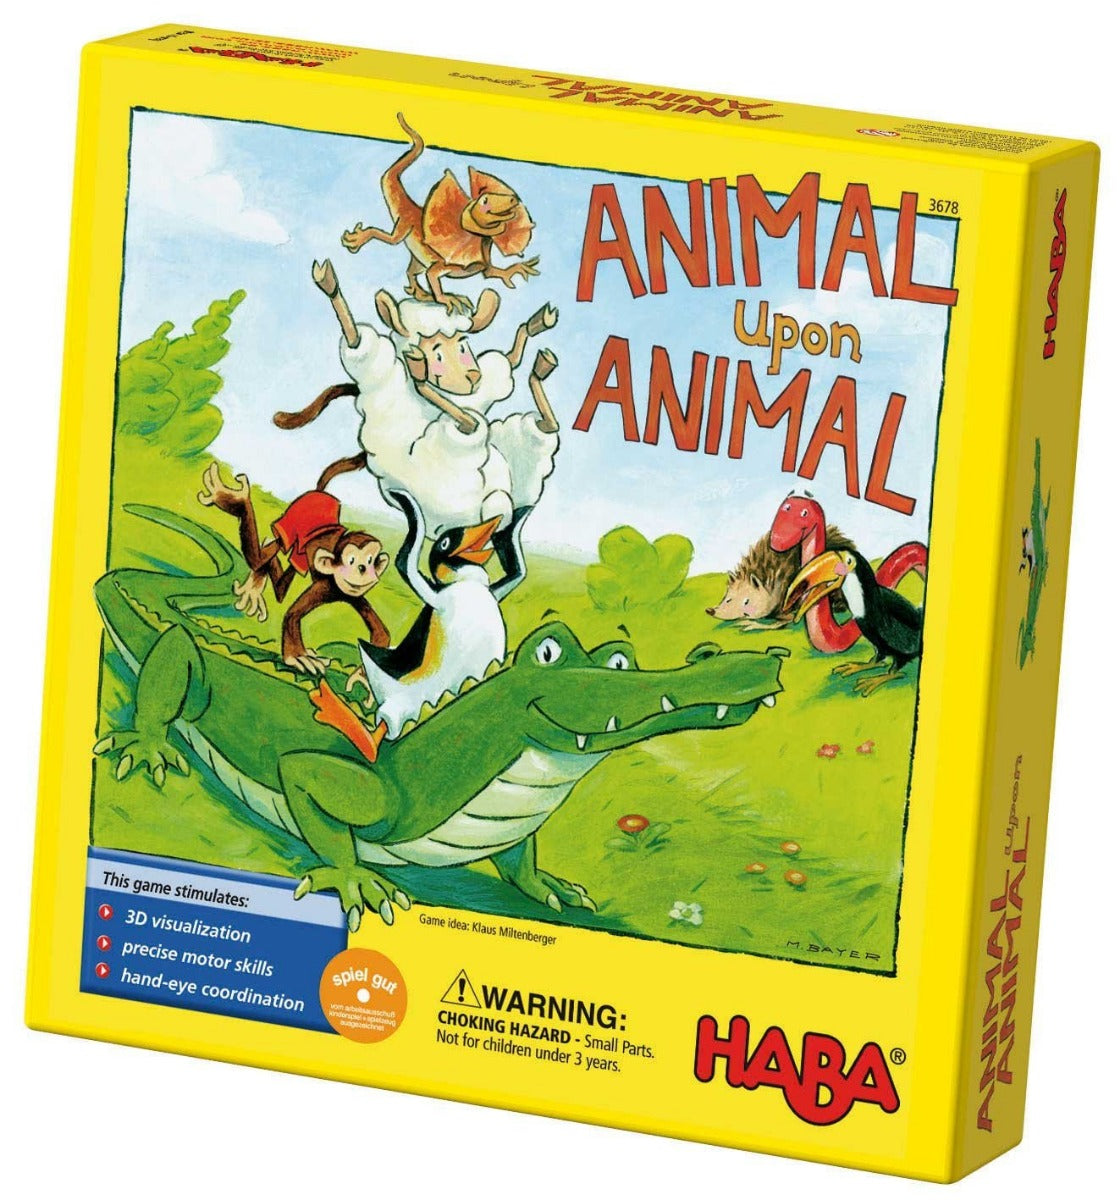 Haba Animal Upon Animal [Gently used] [#302]